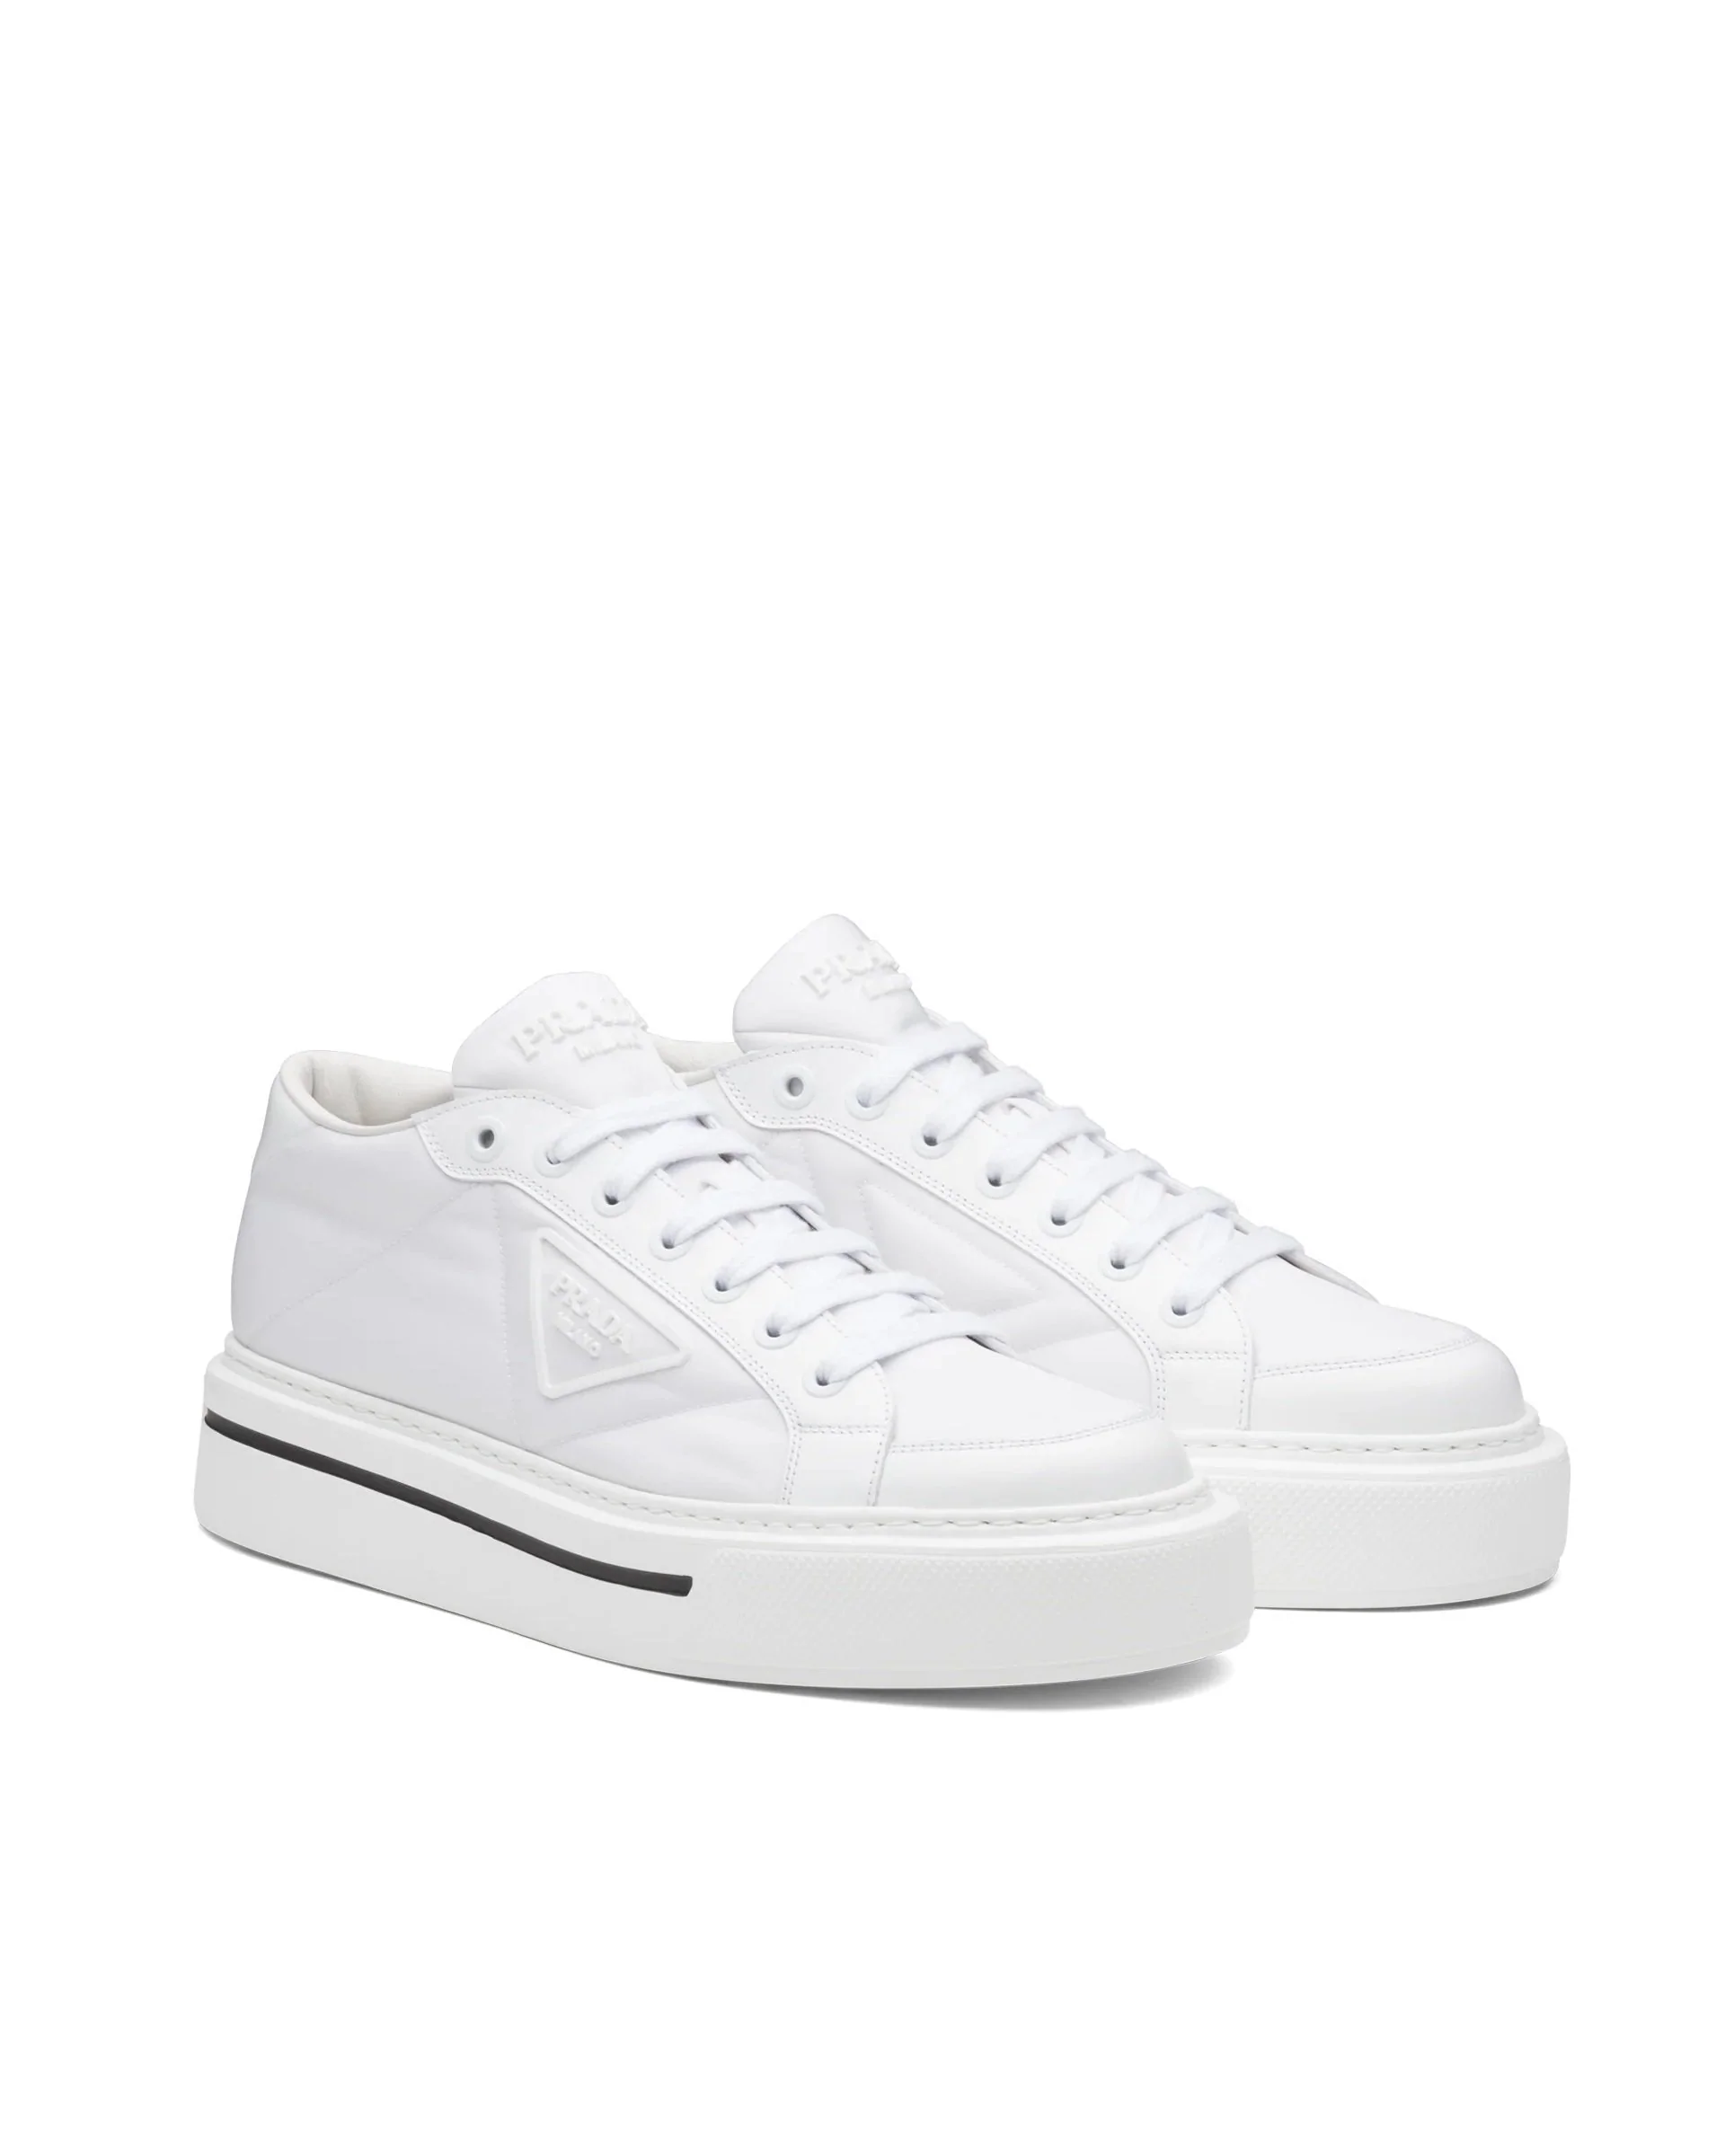 Prada Macro Re-Nylon And Brushed Leather Sneakers, White